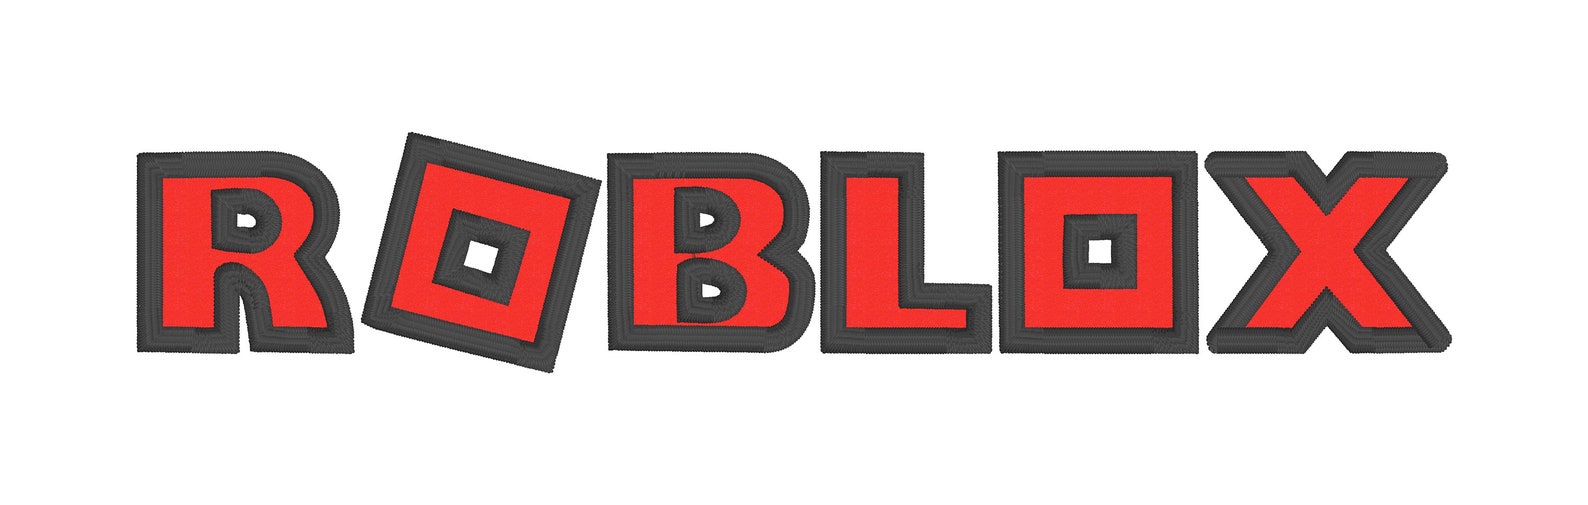 Roblox Logo Design Applique 1 Size only | Etsy